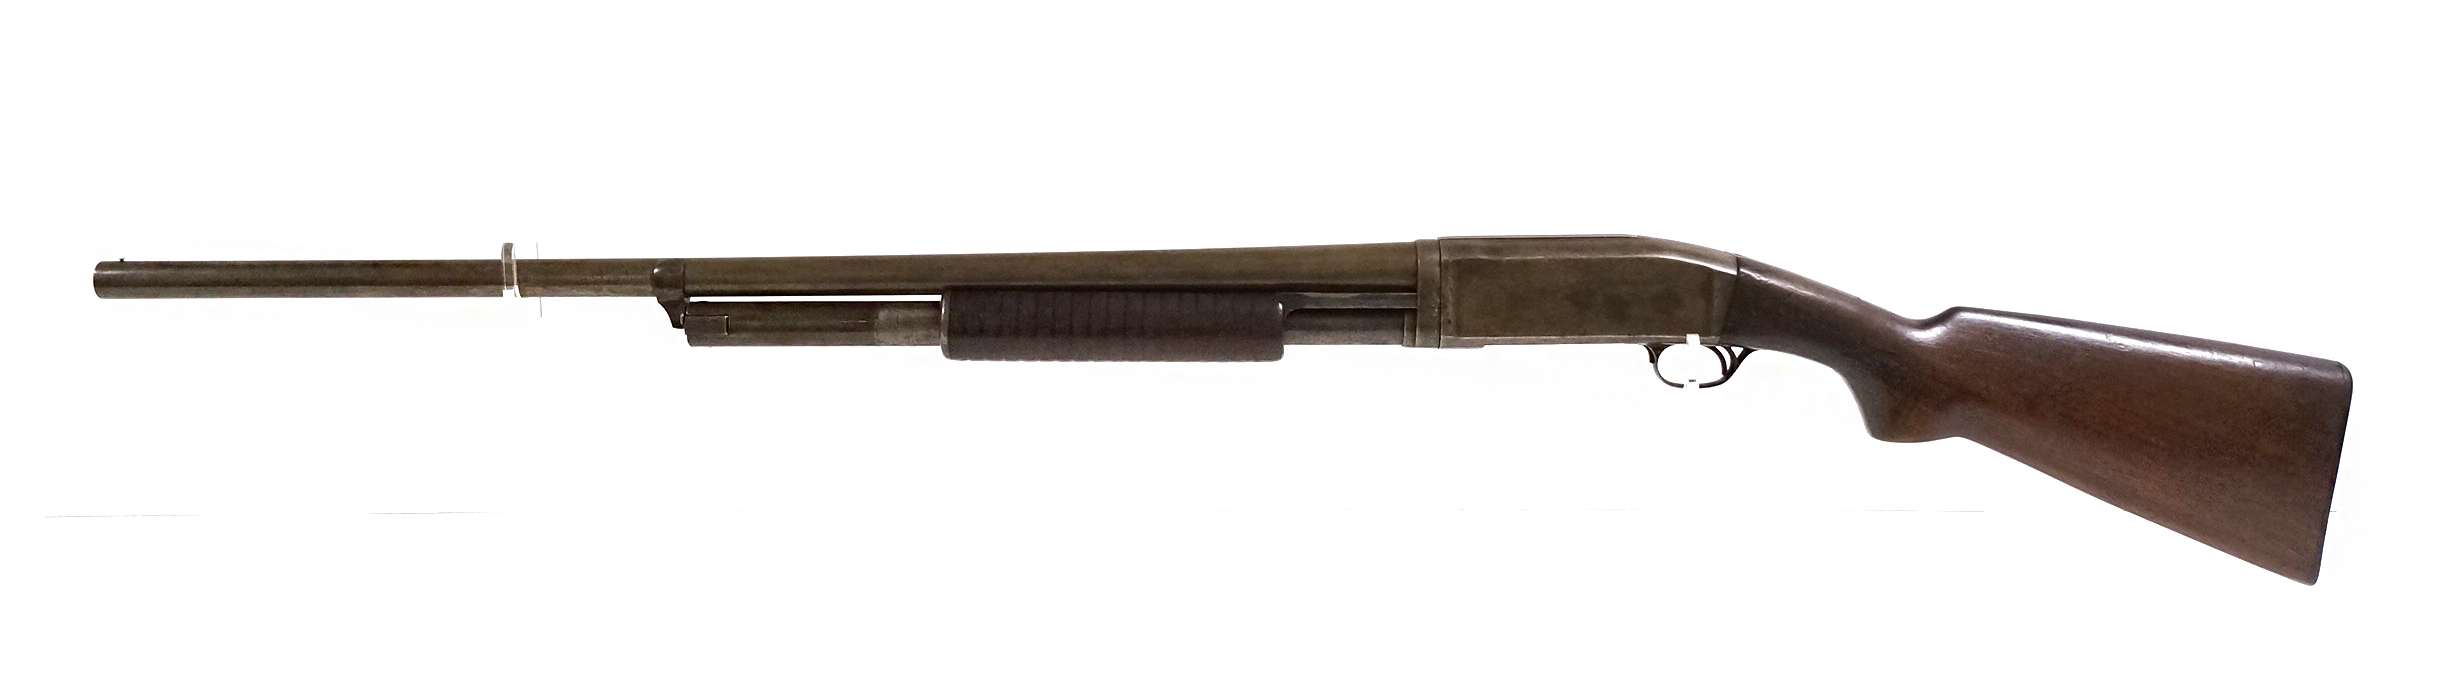 REMINGTON ARMS M19 BRASS 12 GAGE SHOTGUN WWII NEW REPLICA 10 ROUND